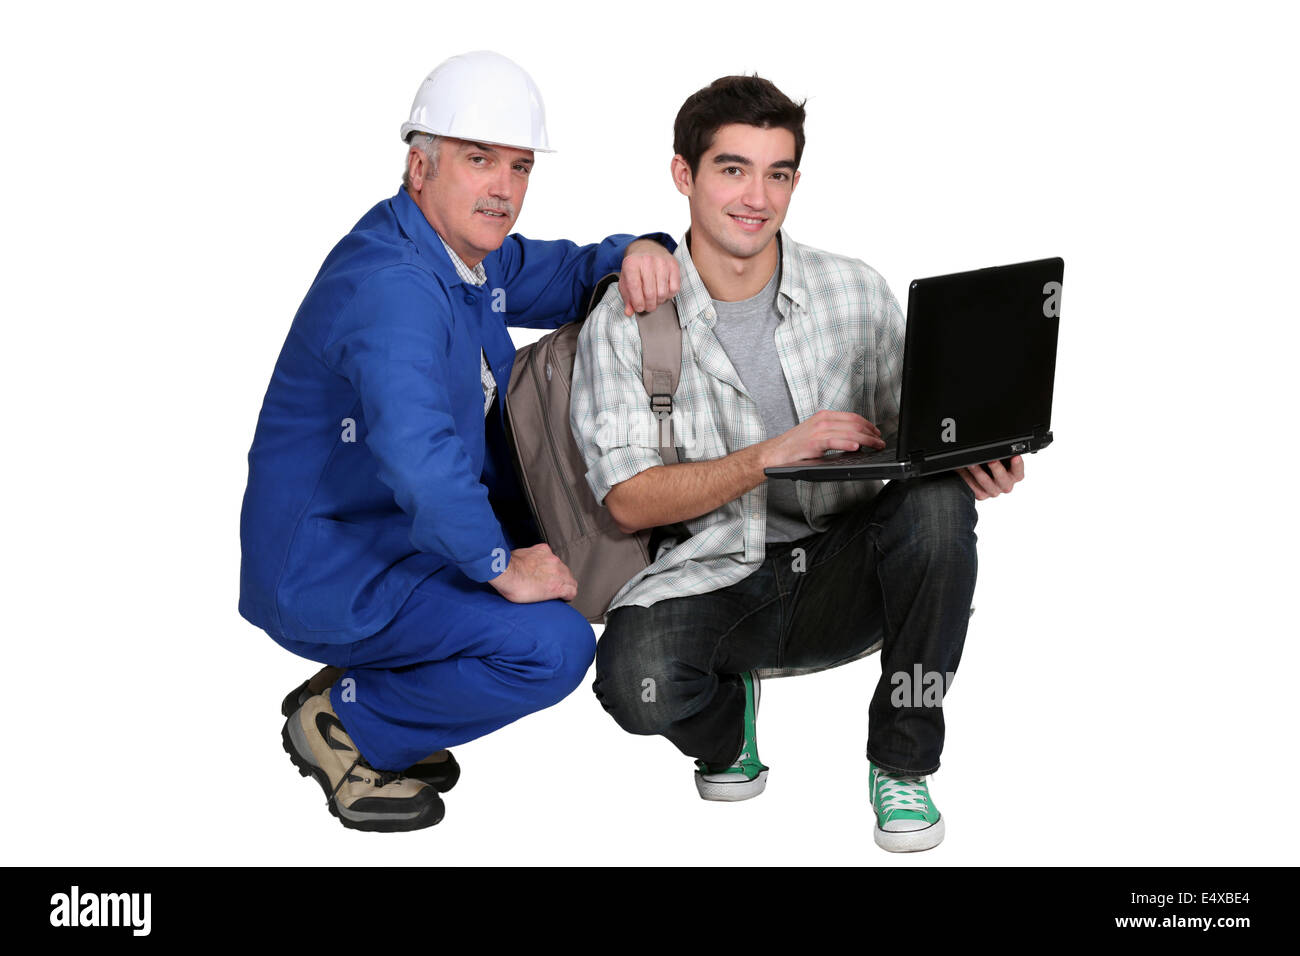 A tradesman helping his apprentice Stock Photo